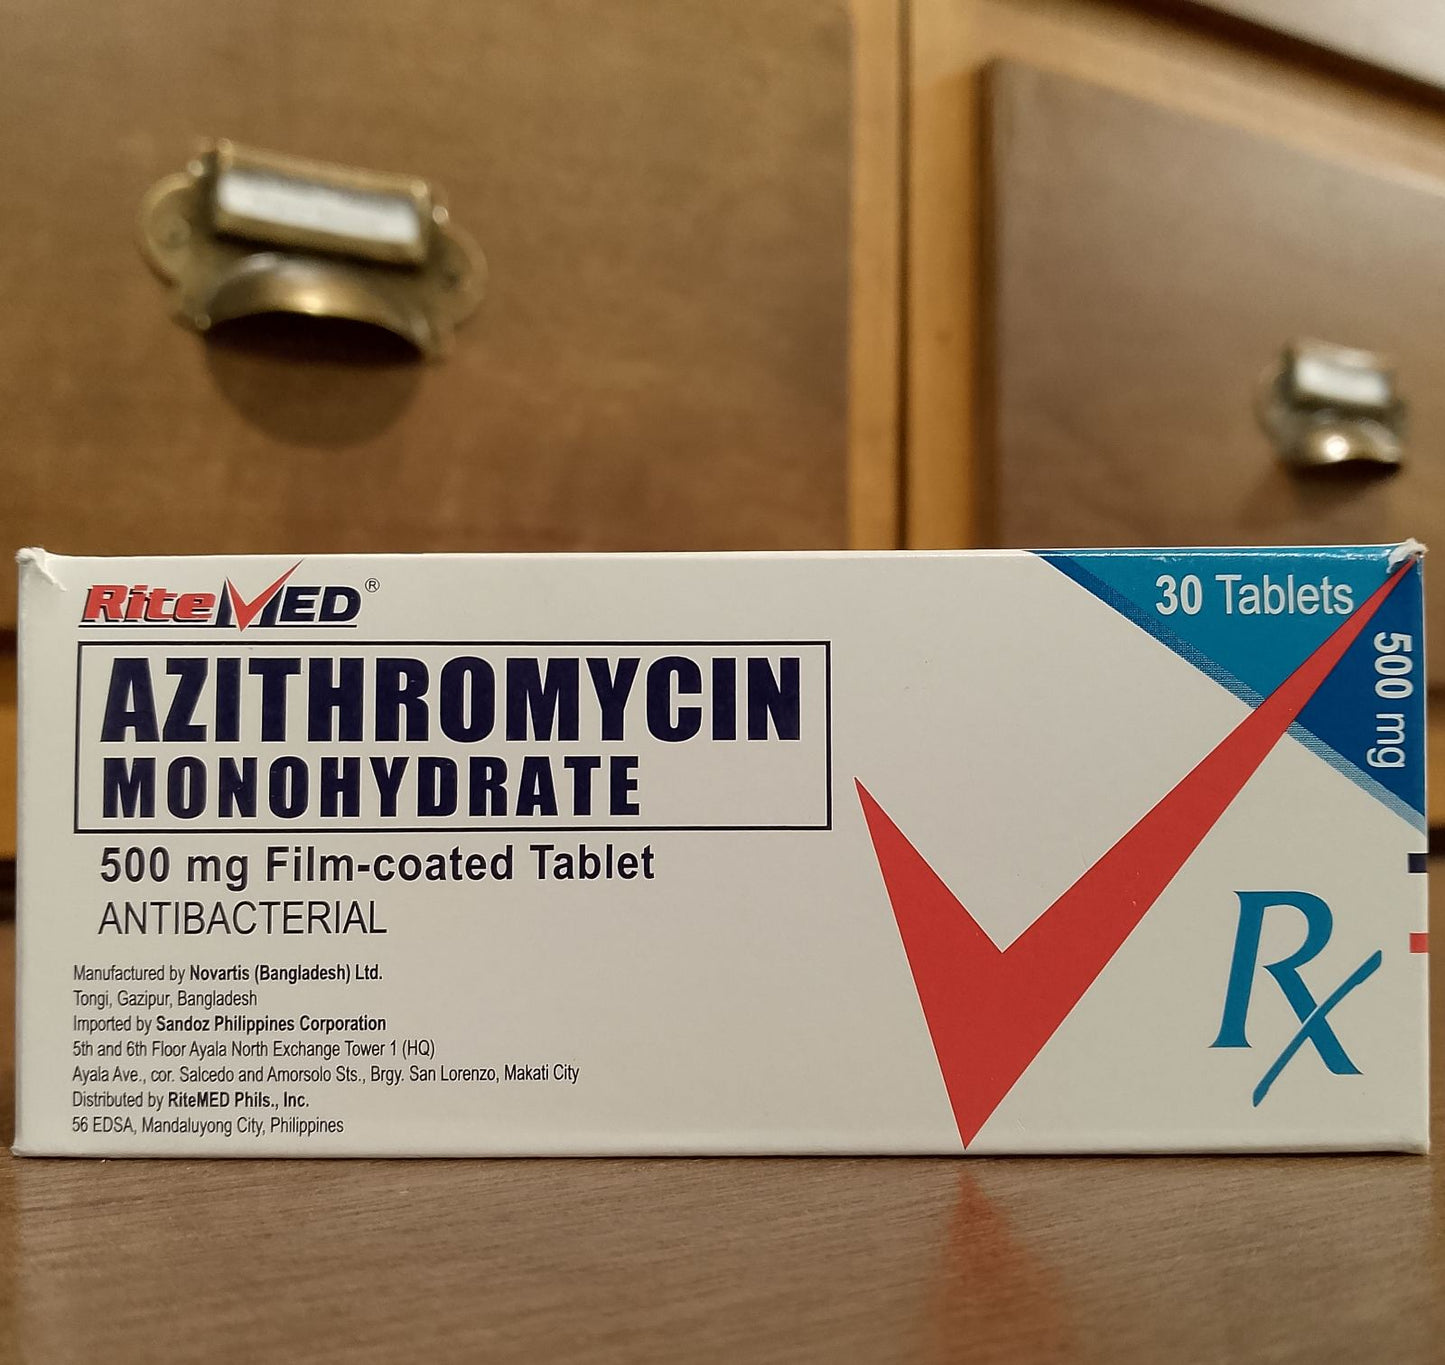 Azithromycin (RITEMED) 500mg Film-coated Tablet